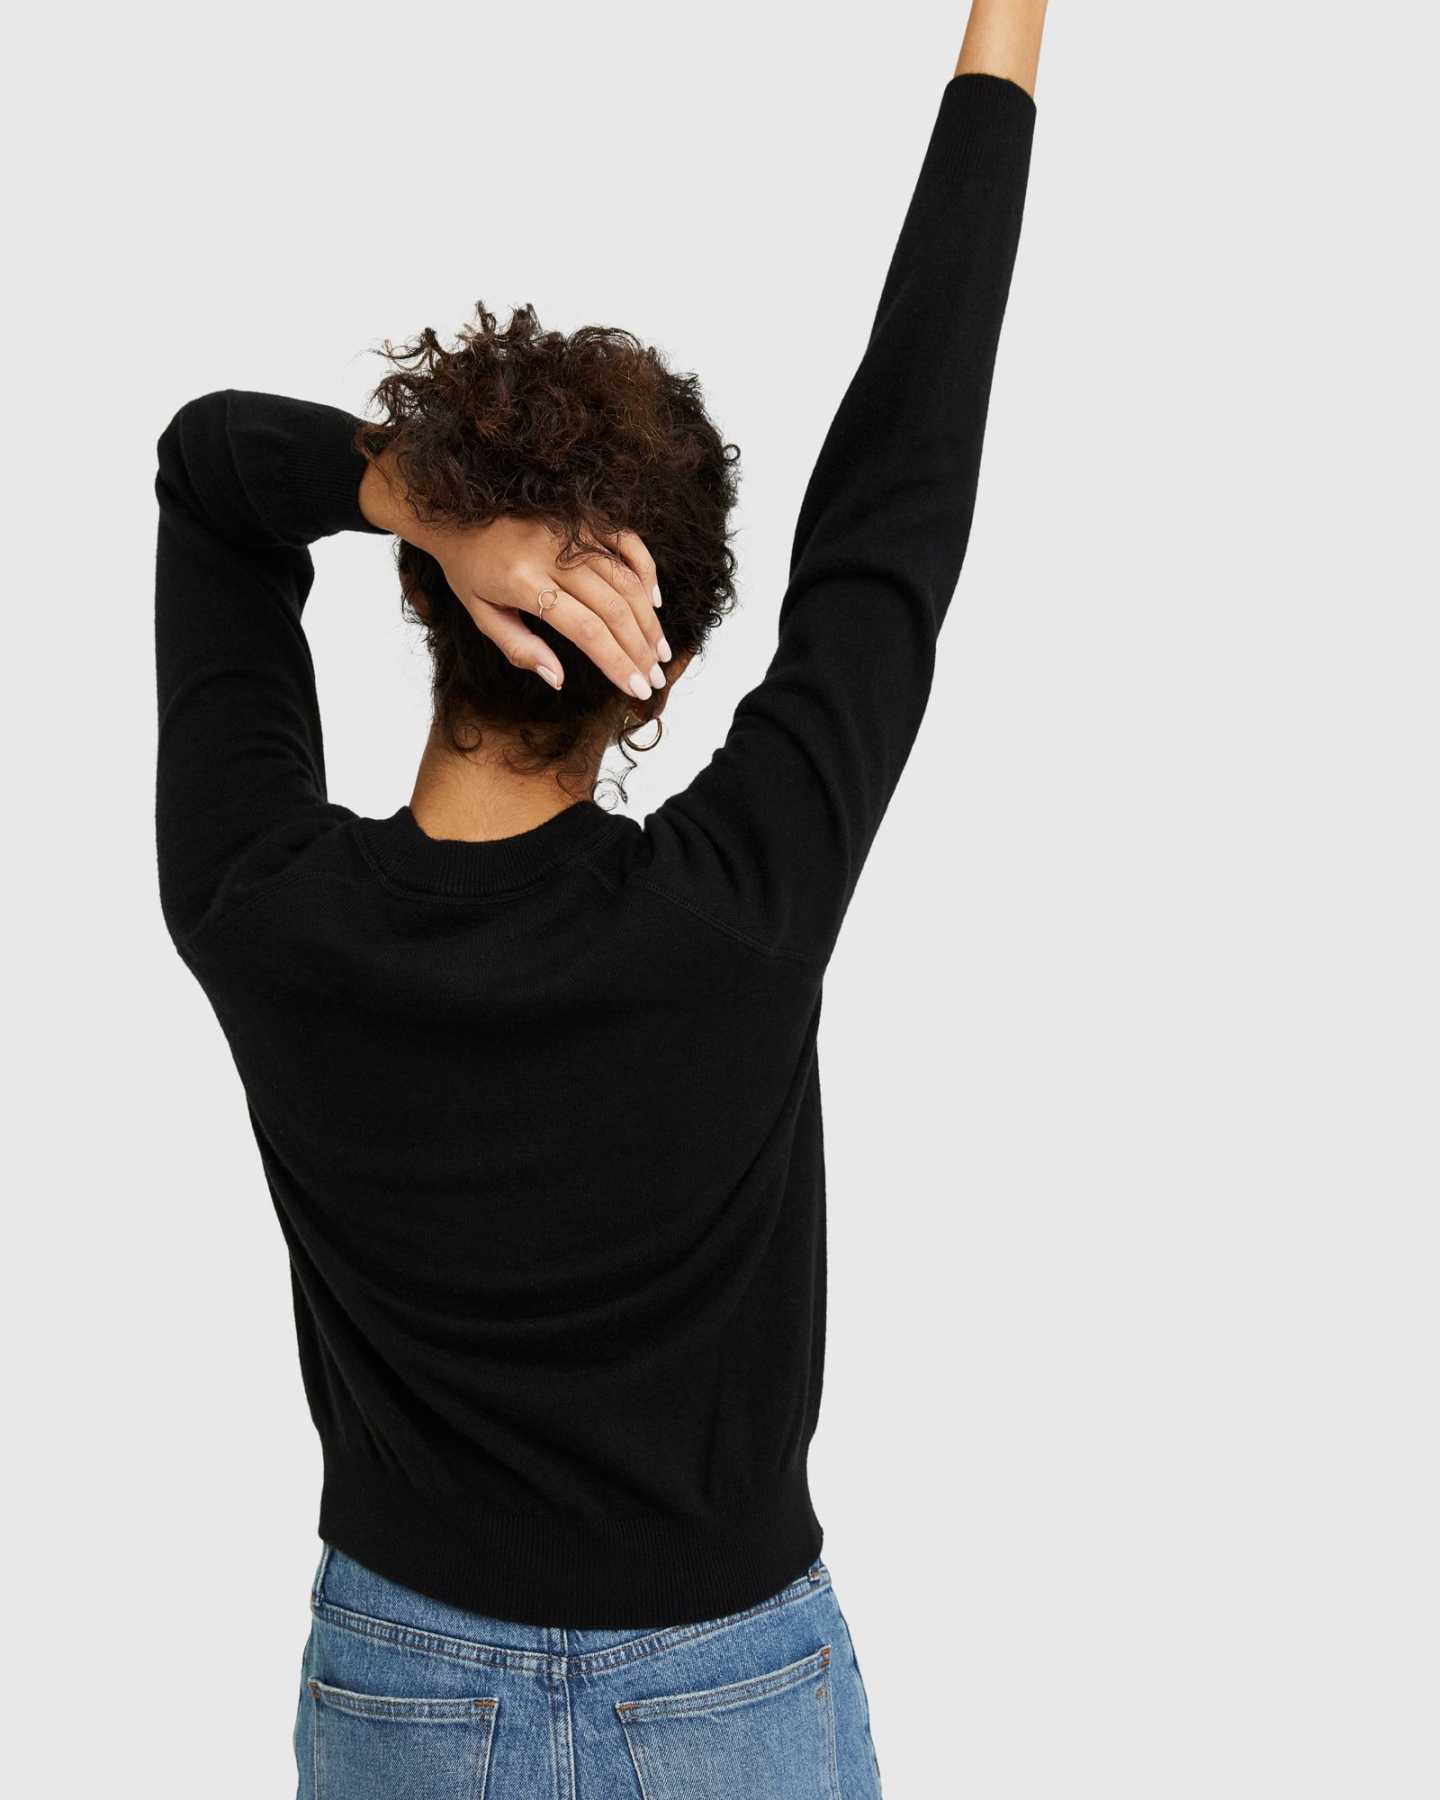 black cashmere sweatshirt for women arms raised